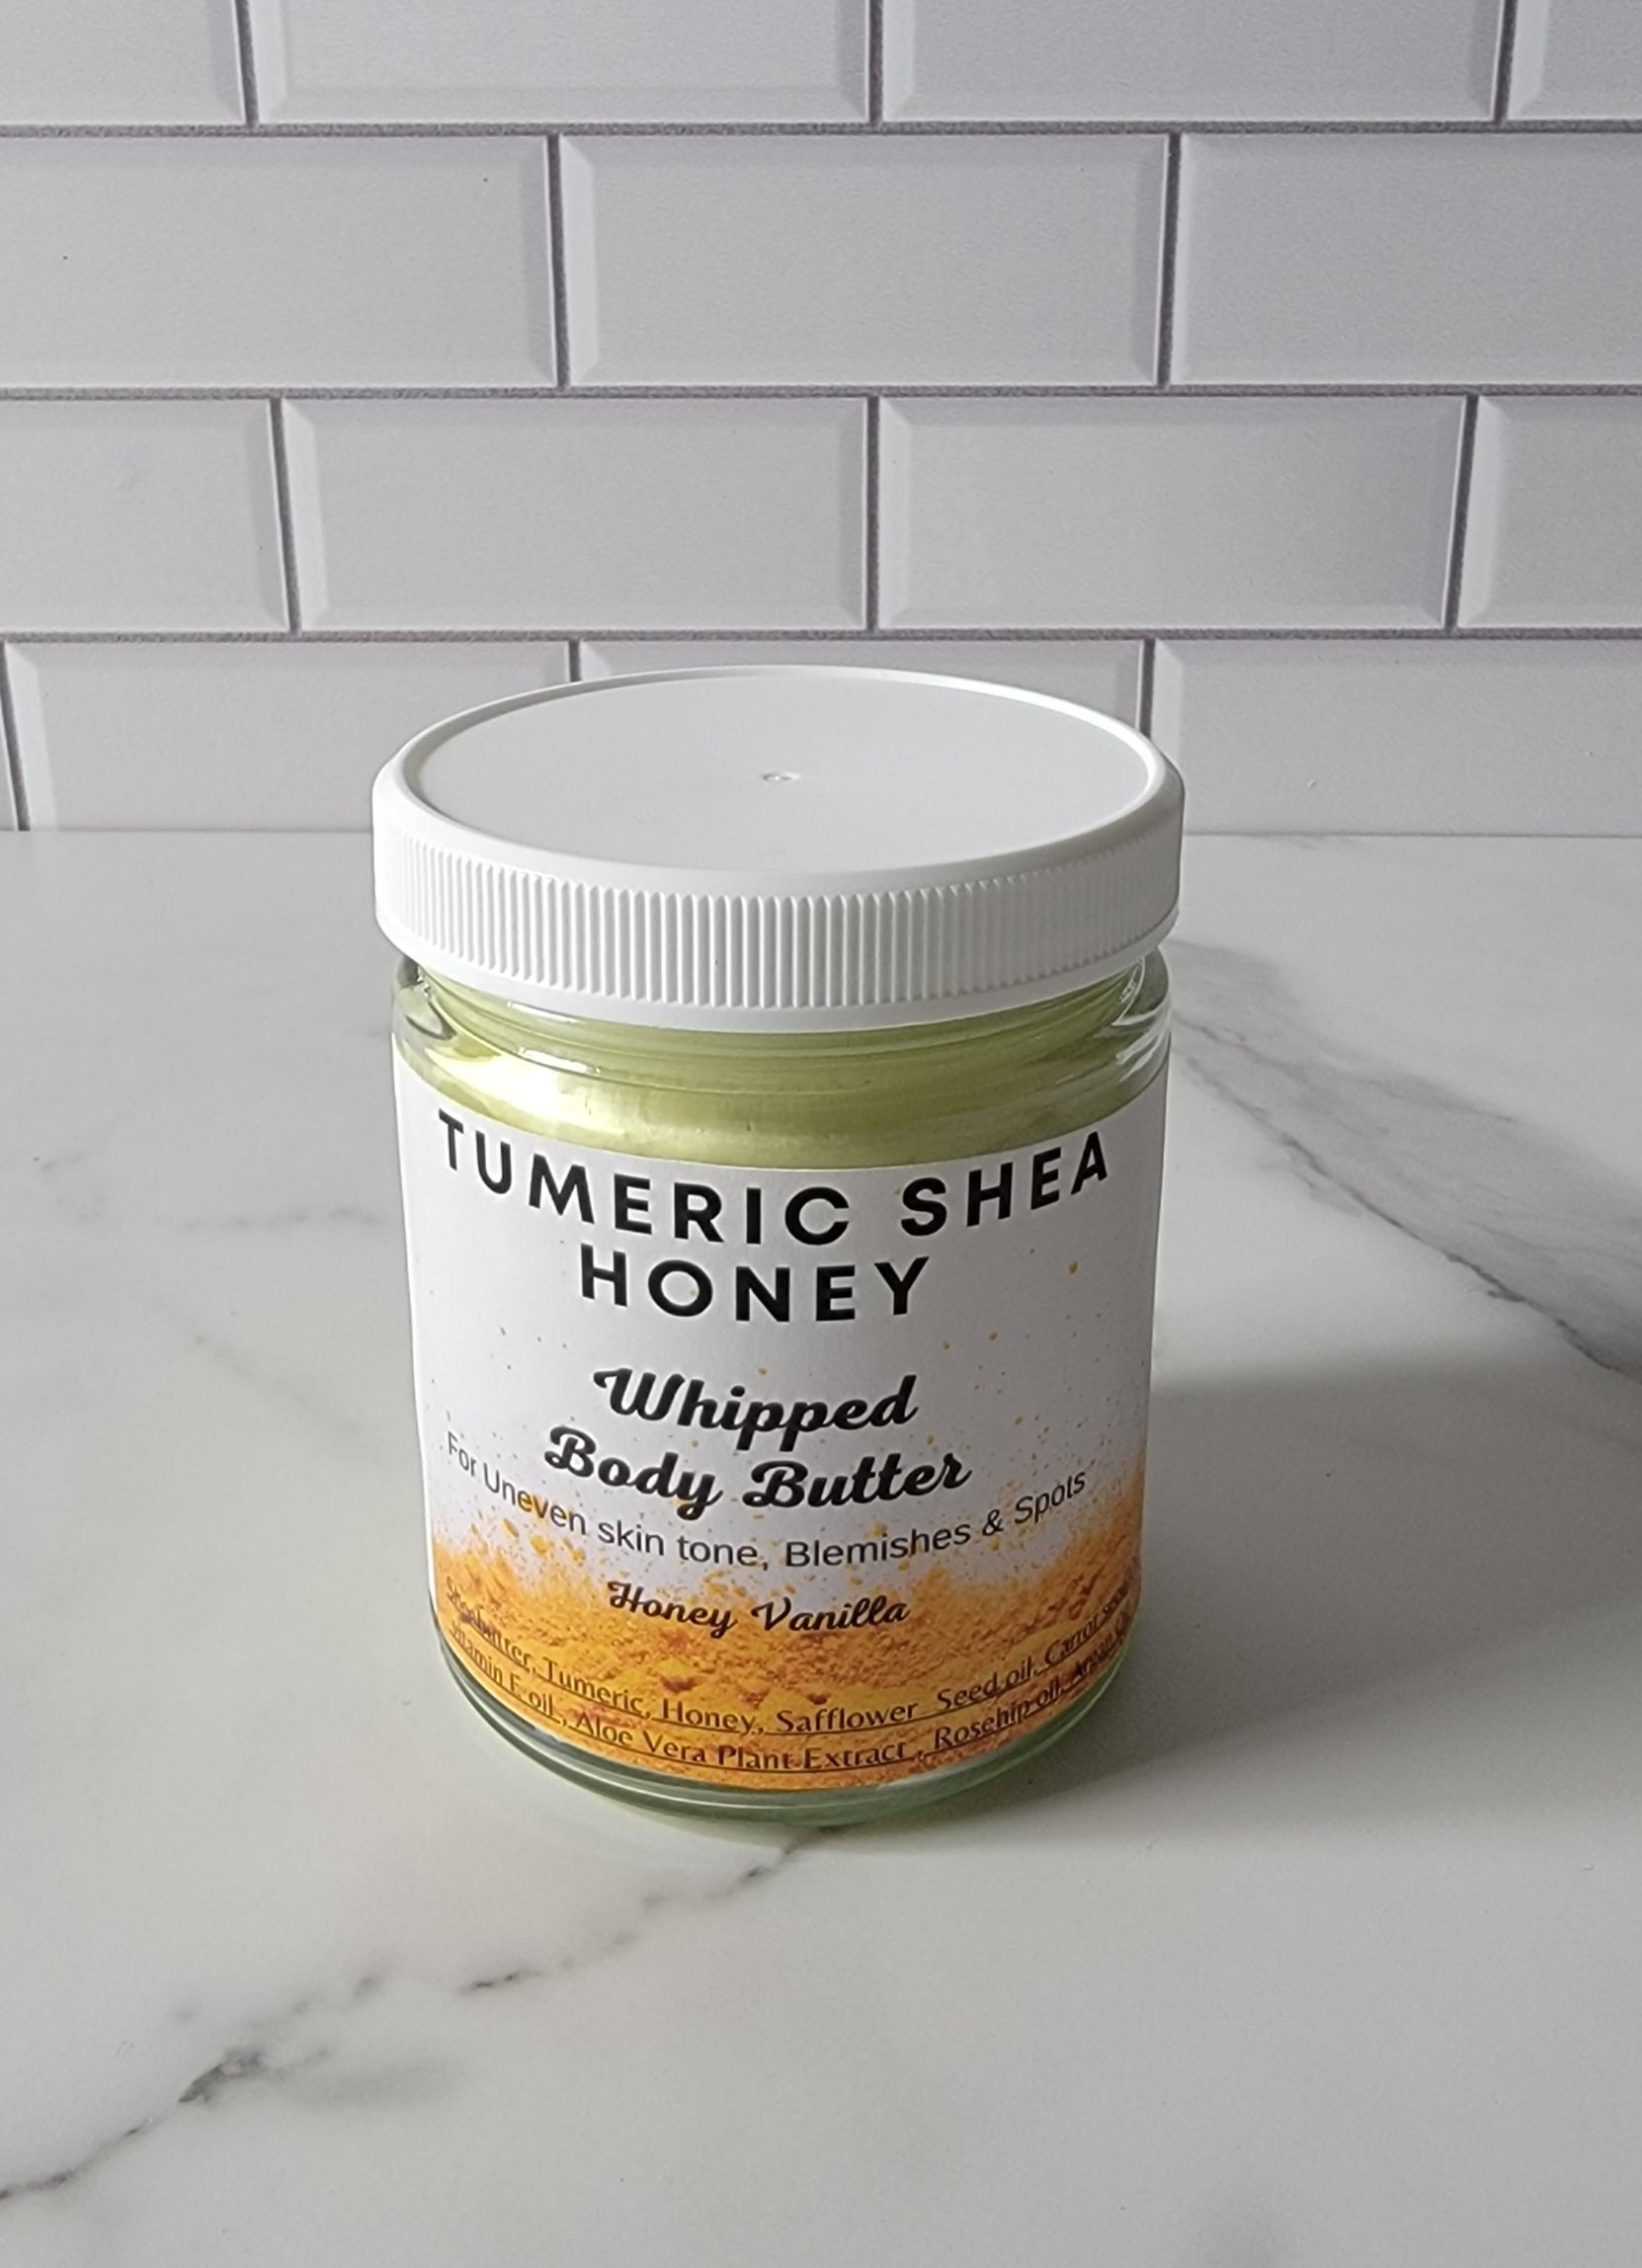 Tumeric Shea Honey Whipped Body Butter. 9 oz. (Honey Vanilla Scented)